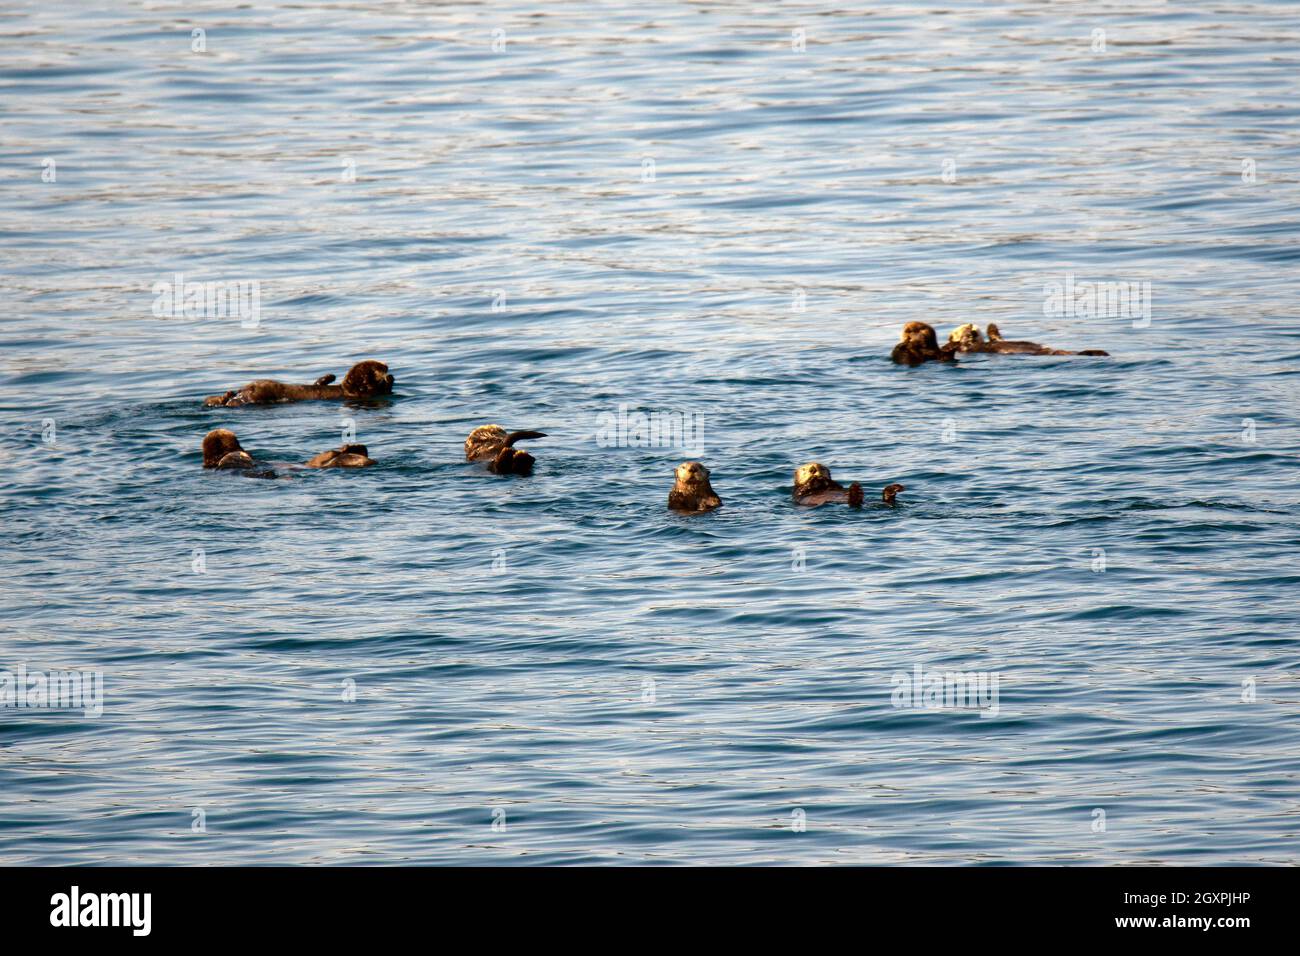 A group of northern sea otters, Enhydra lutris, Alaska, USA Stock Photo